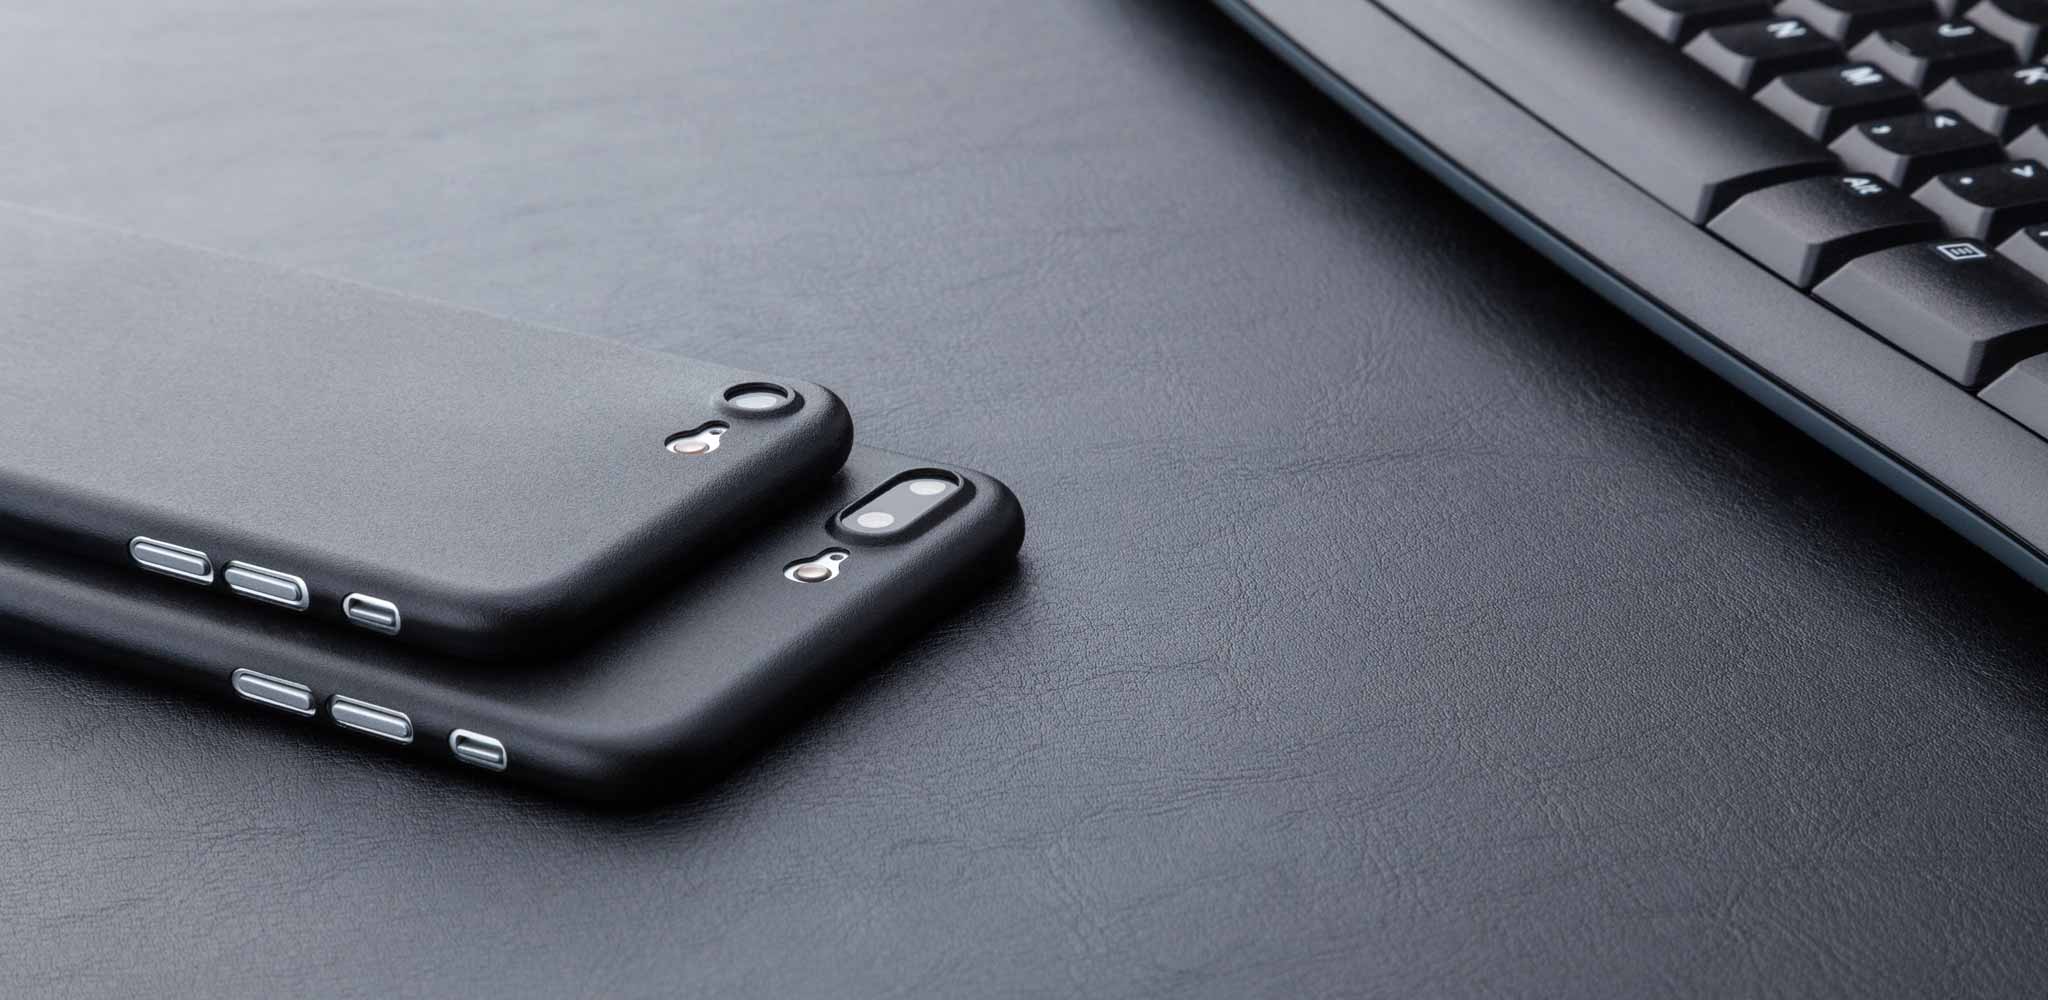 Caudabe Veil XT | Ultra thin iPhone 7 Plus case | Twin Phones